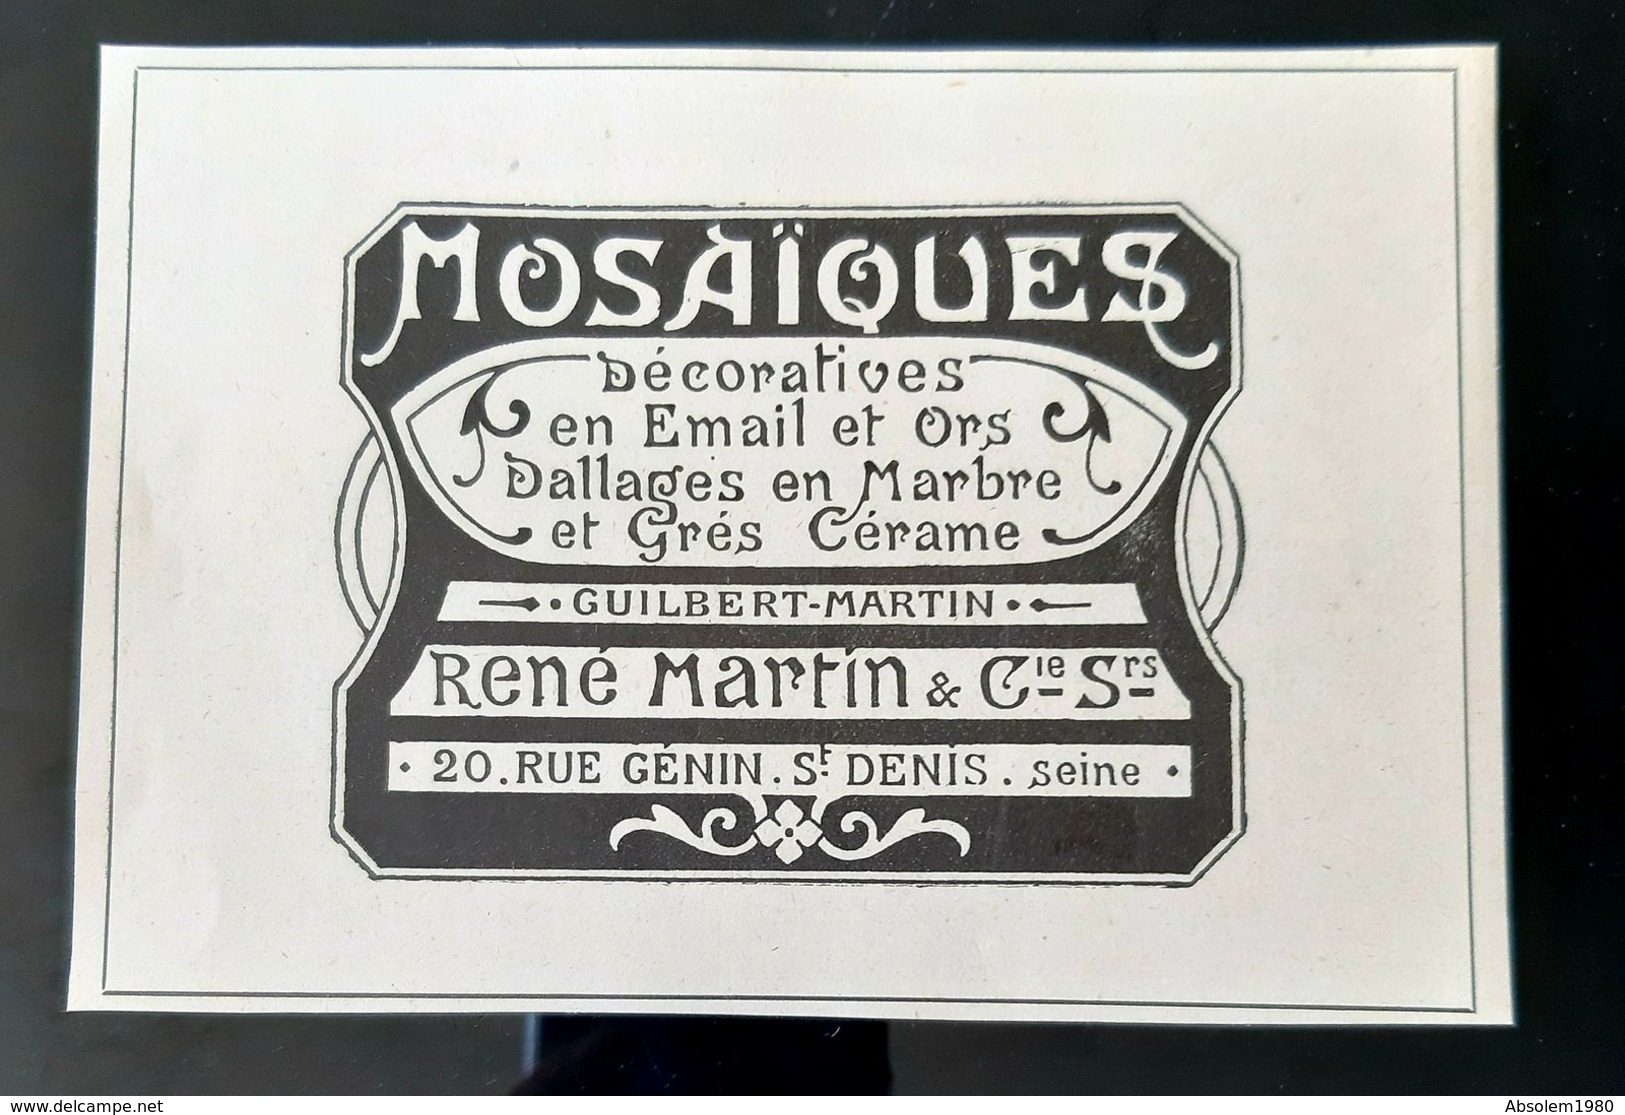 MOSAIQUES DECORATIVES RENE GUILBERT MARTIN EMAIL GRES CERAME ART NOUVEAU PUBLICITE 1900 ADVERTISING JUGENDSTIL MOSAIC - Pubblicitari